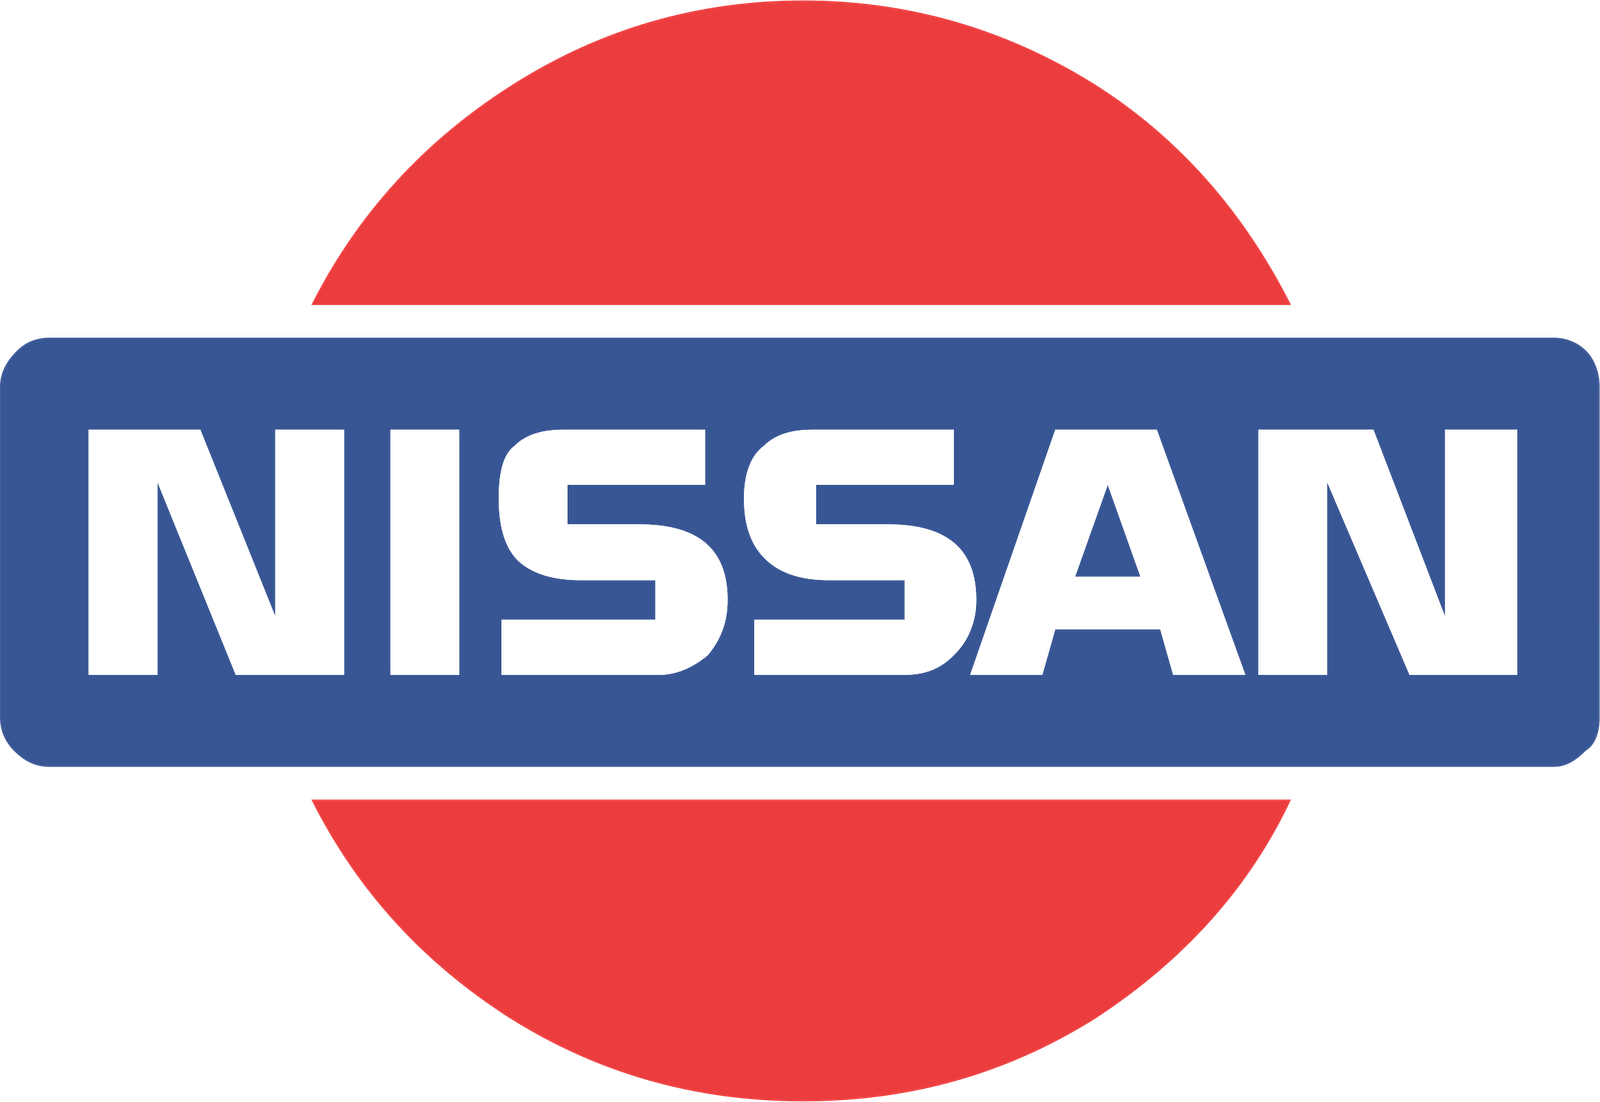 Запчасти Nissan